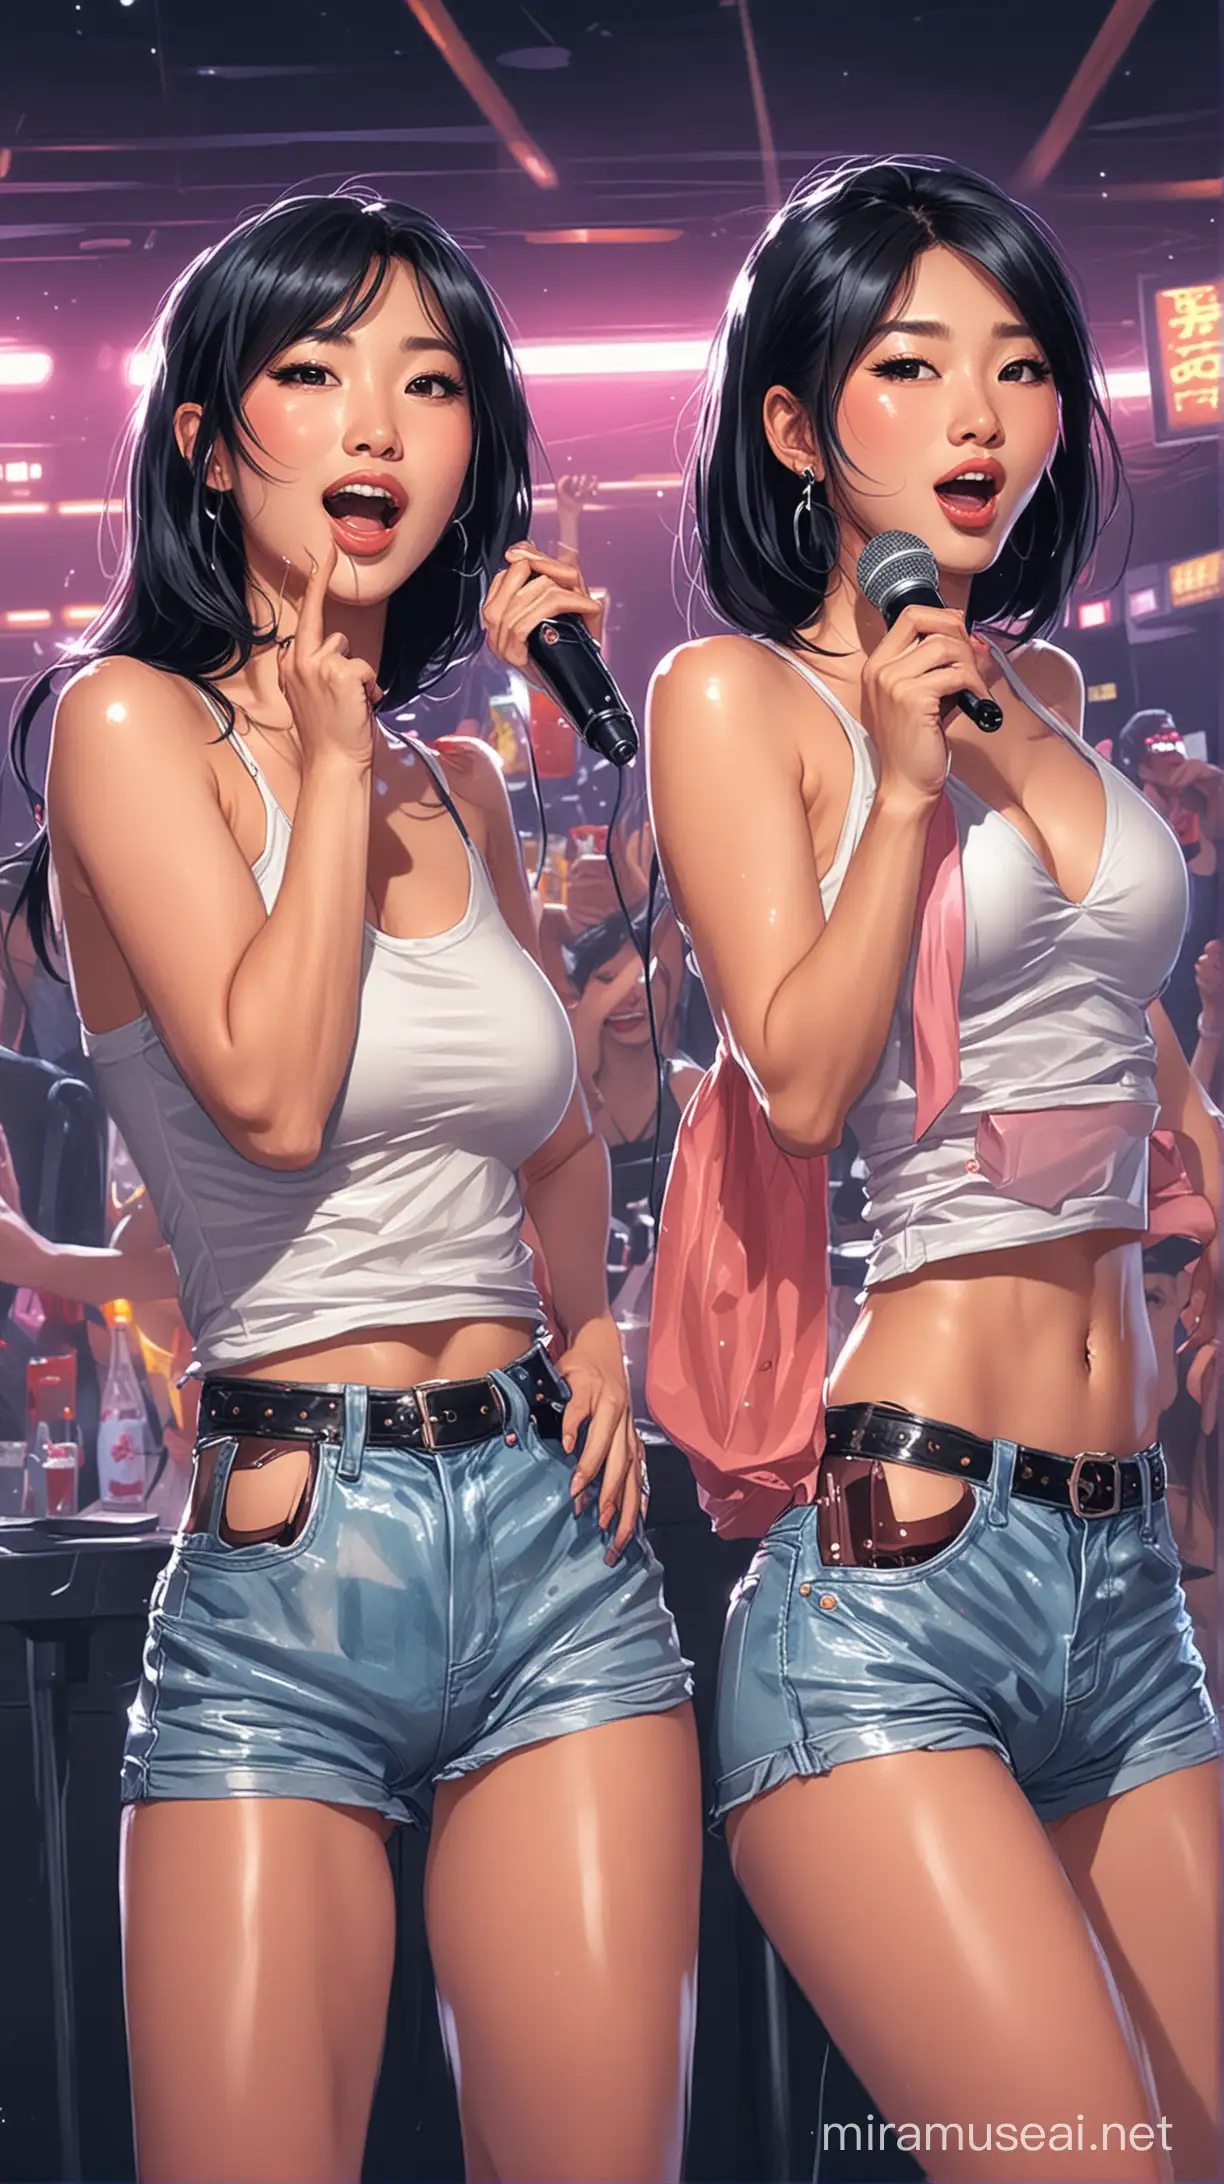 2 sexy asian girls singing a karaoke in a night club, comic illustration
